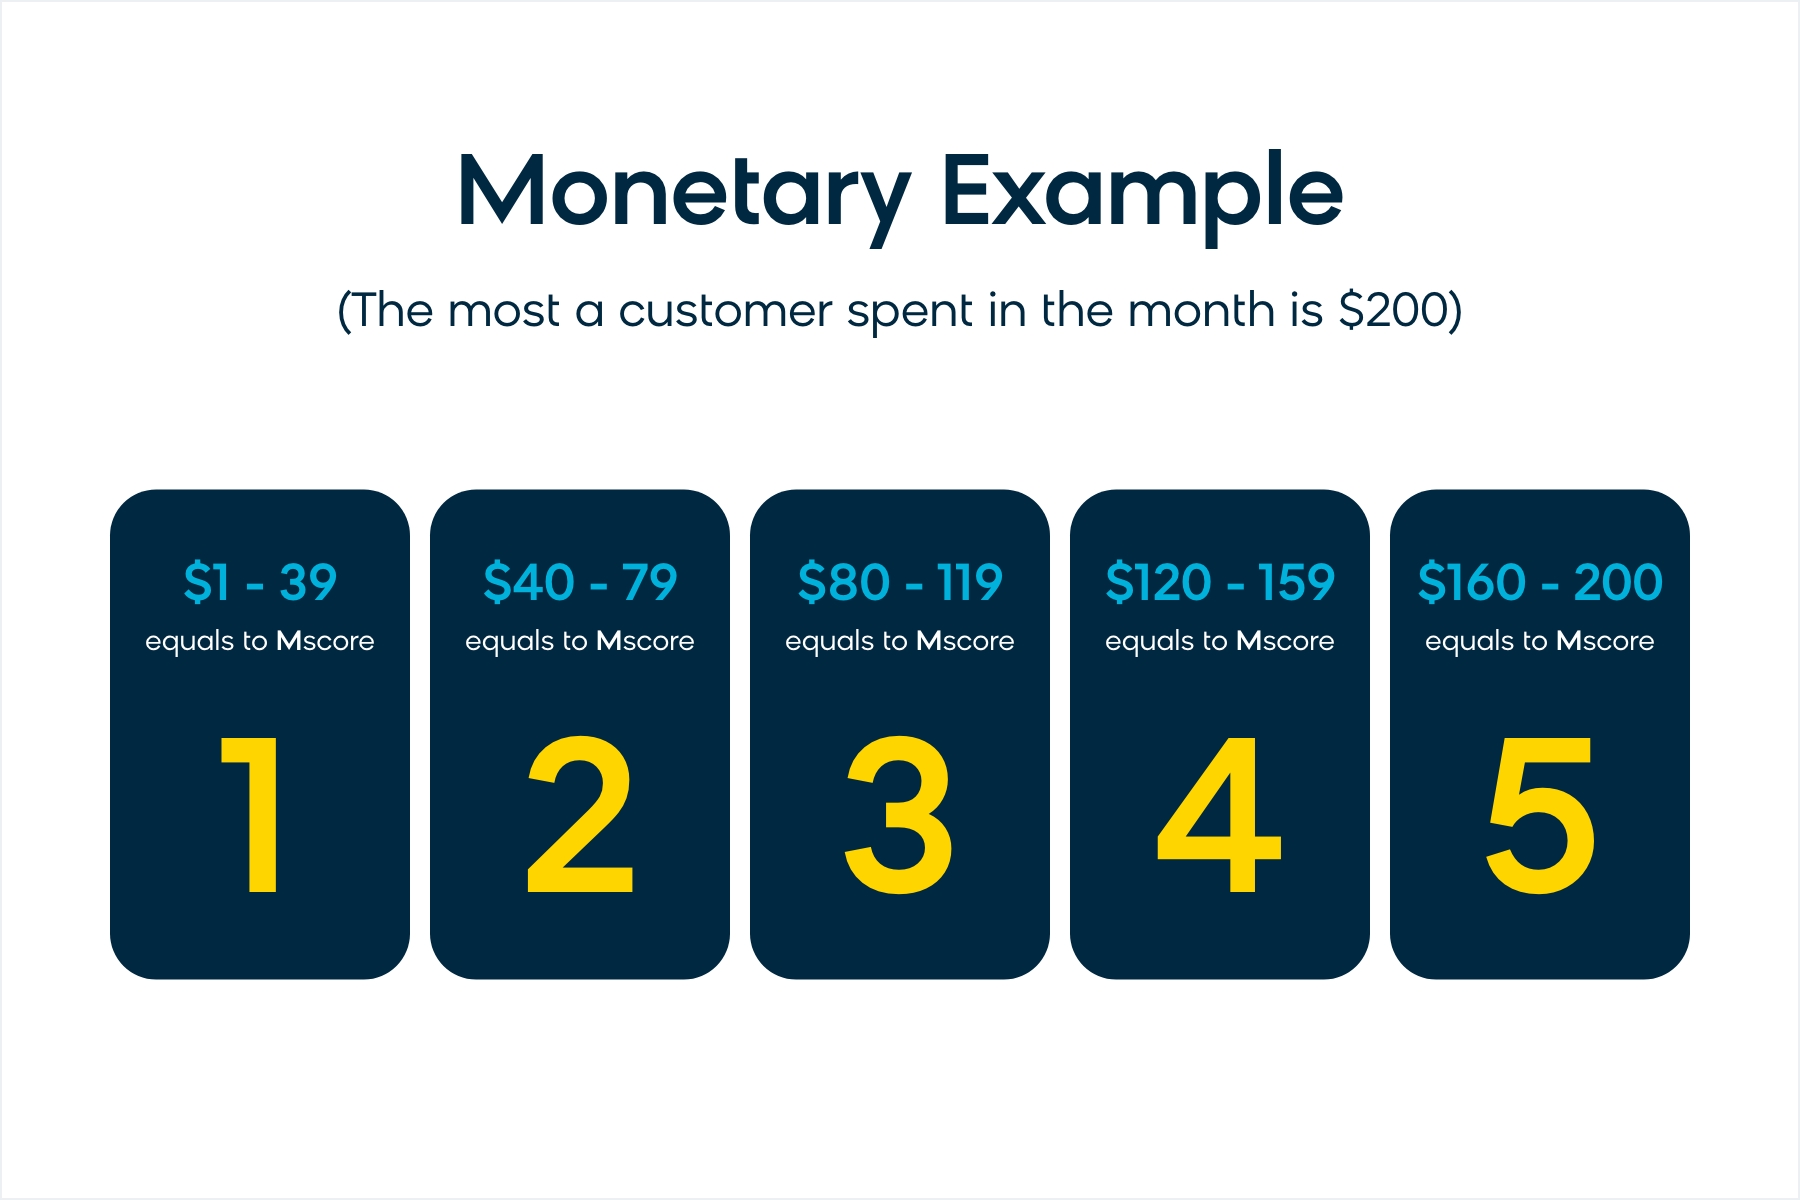 An example of monetary scoring in RFM customer segmentation analysis